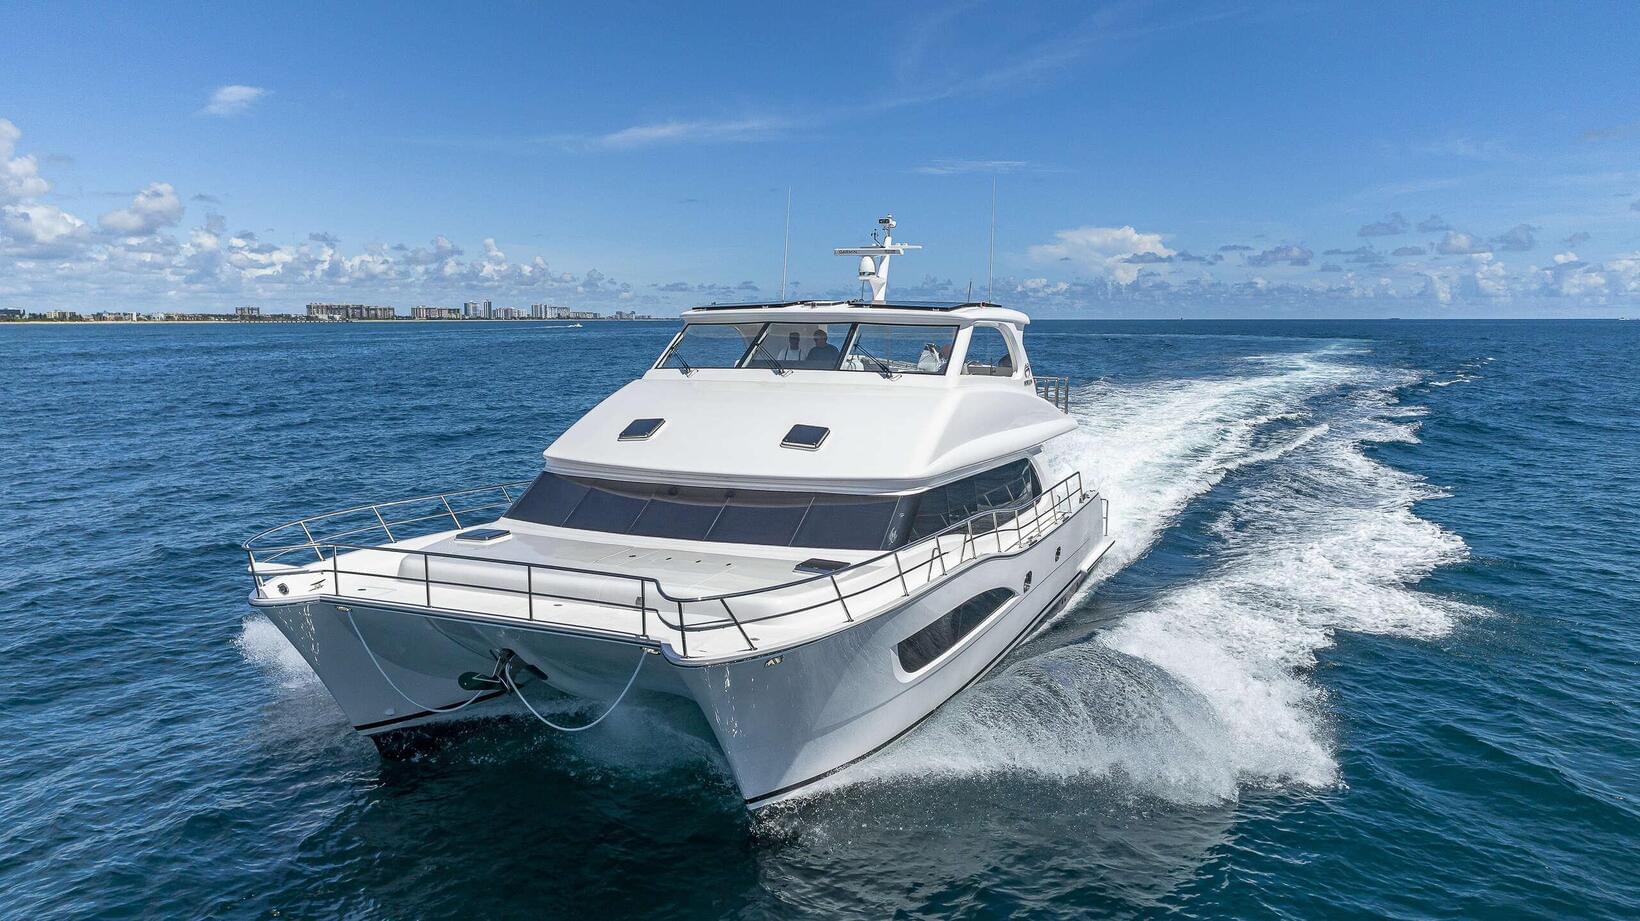 Horizon Power Catamarans Presents “Showcase of Silence” at the Palm Beach International Boat Show